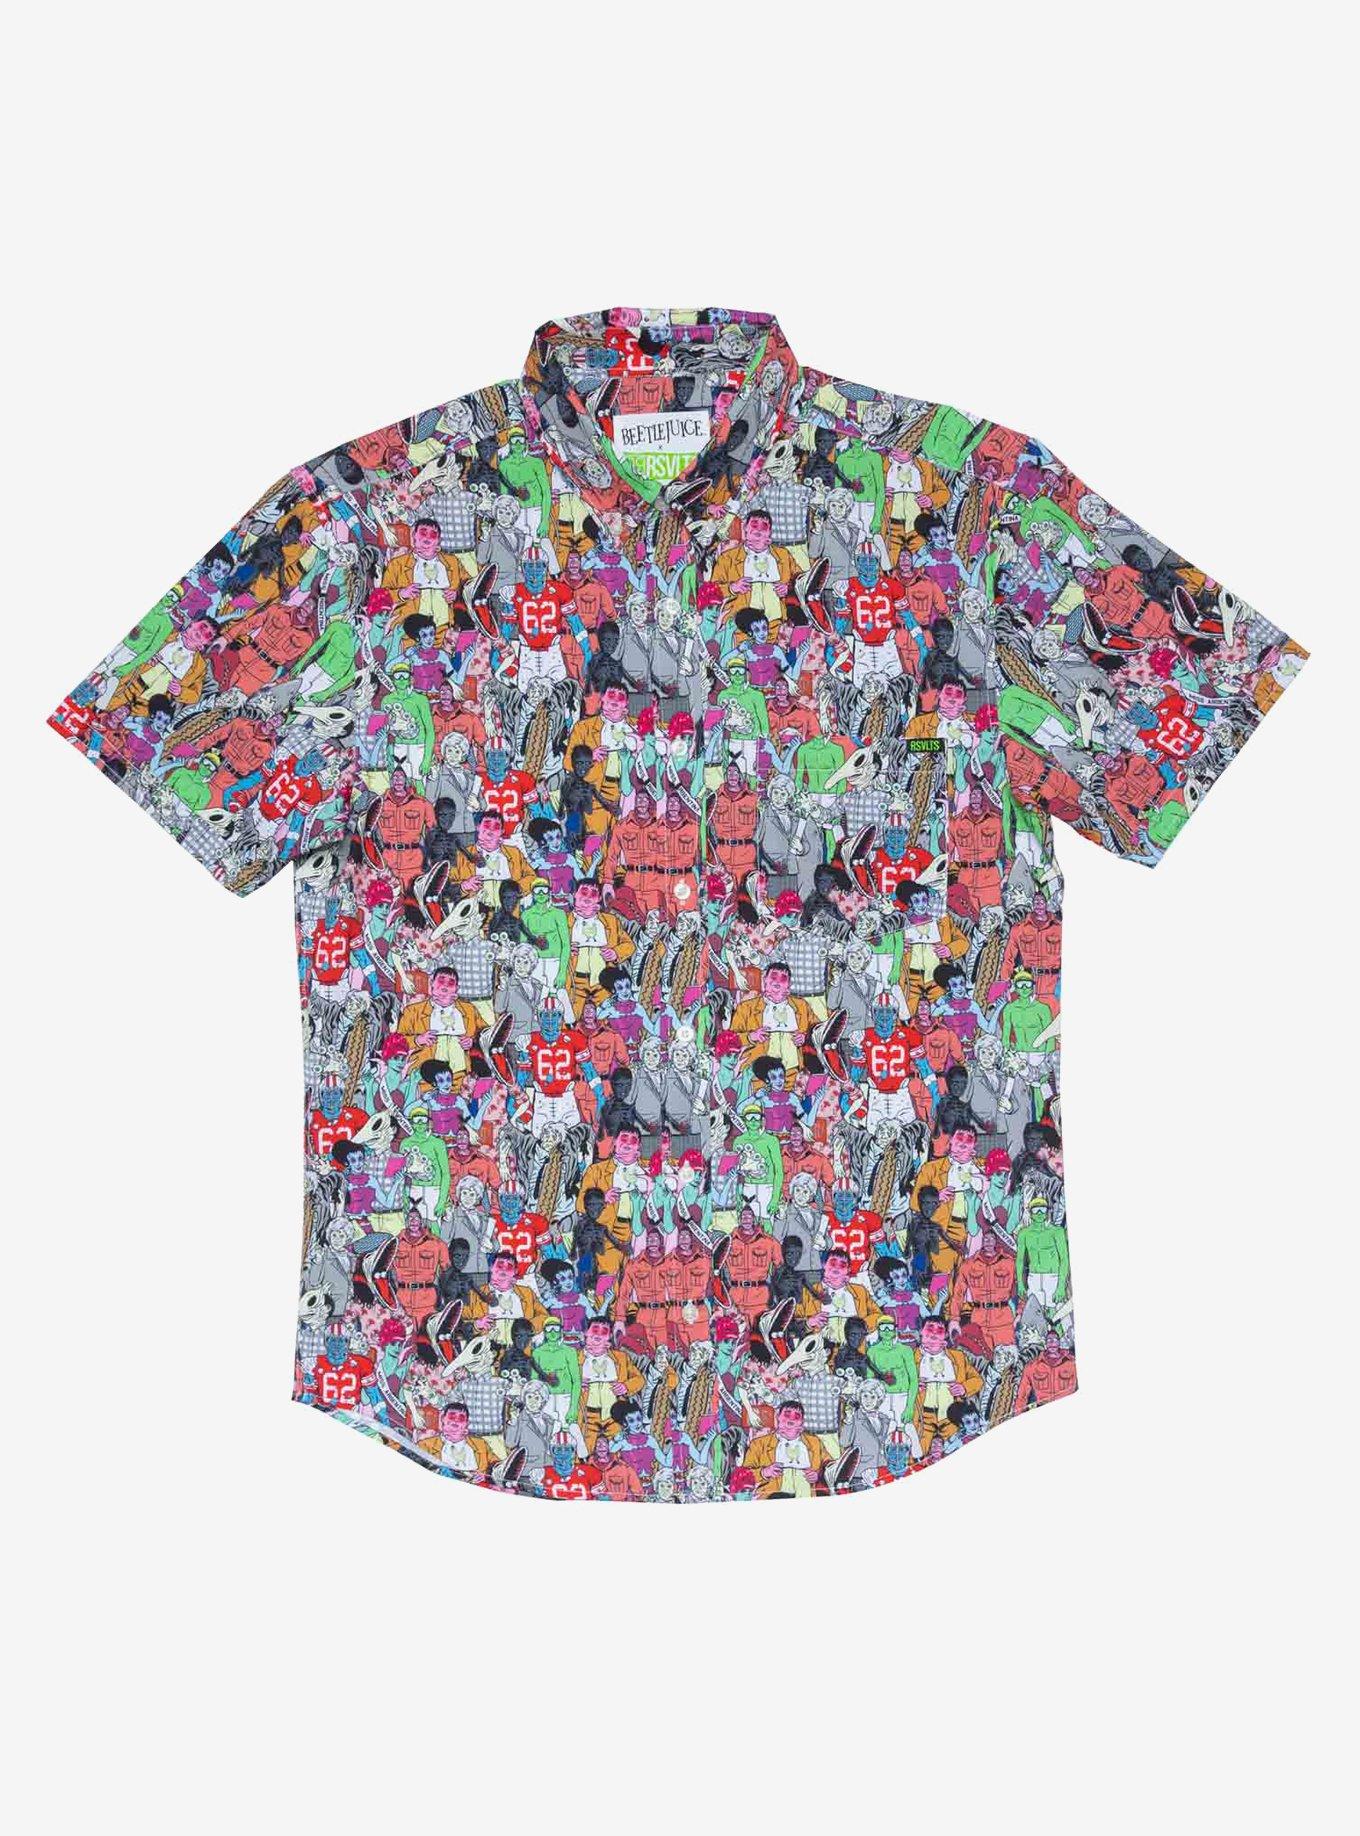 Beetlejuice Broadway Musical Shirt, Trending Unisex T-shirt Short Sleeve